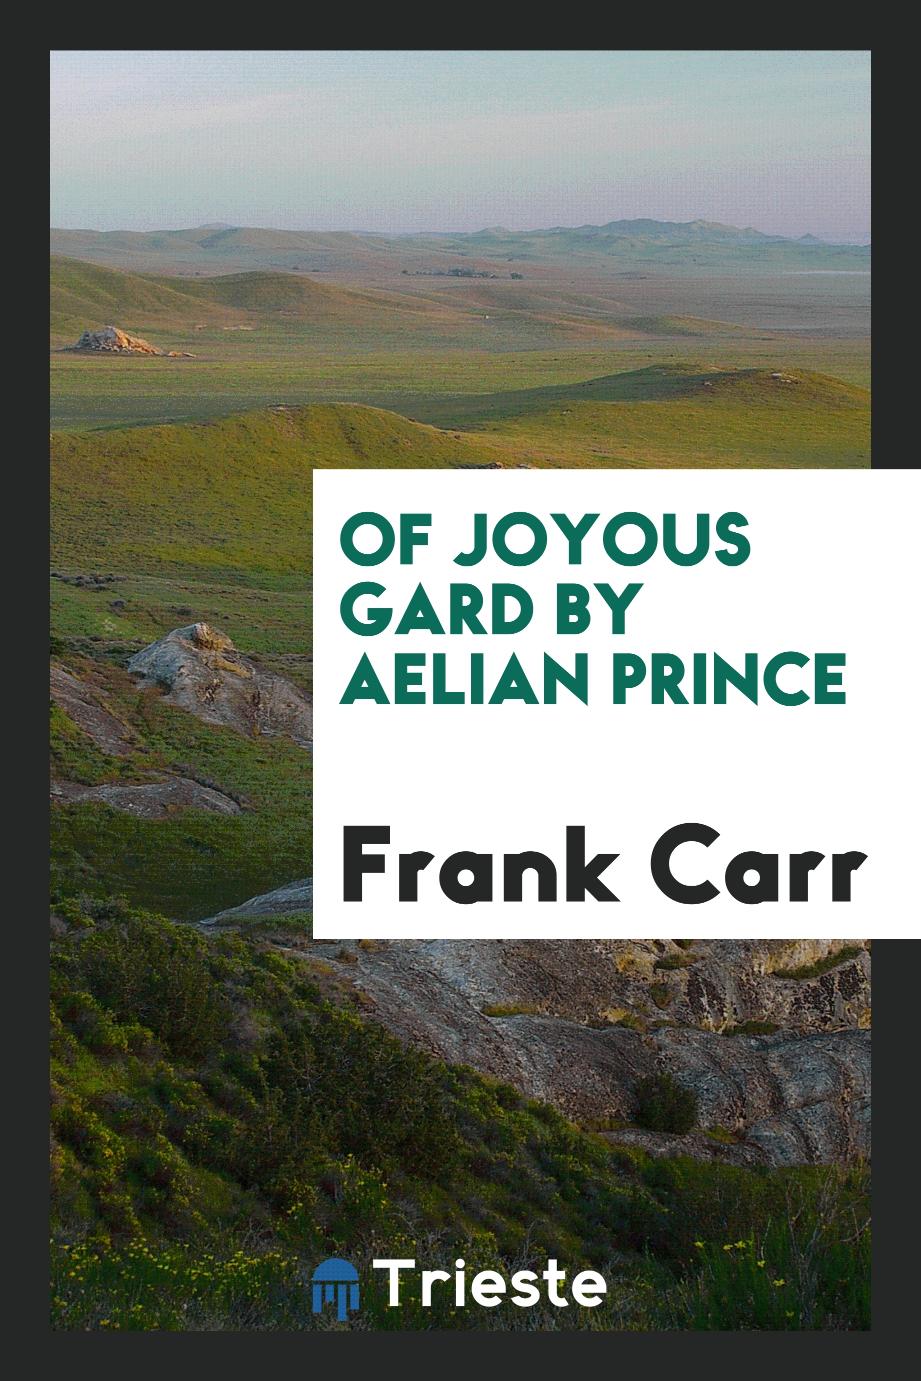 Of Joyous Gard by Aelian Prince